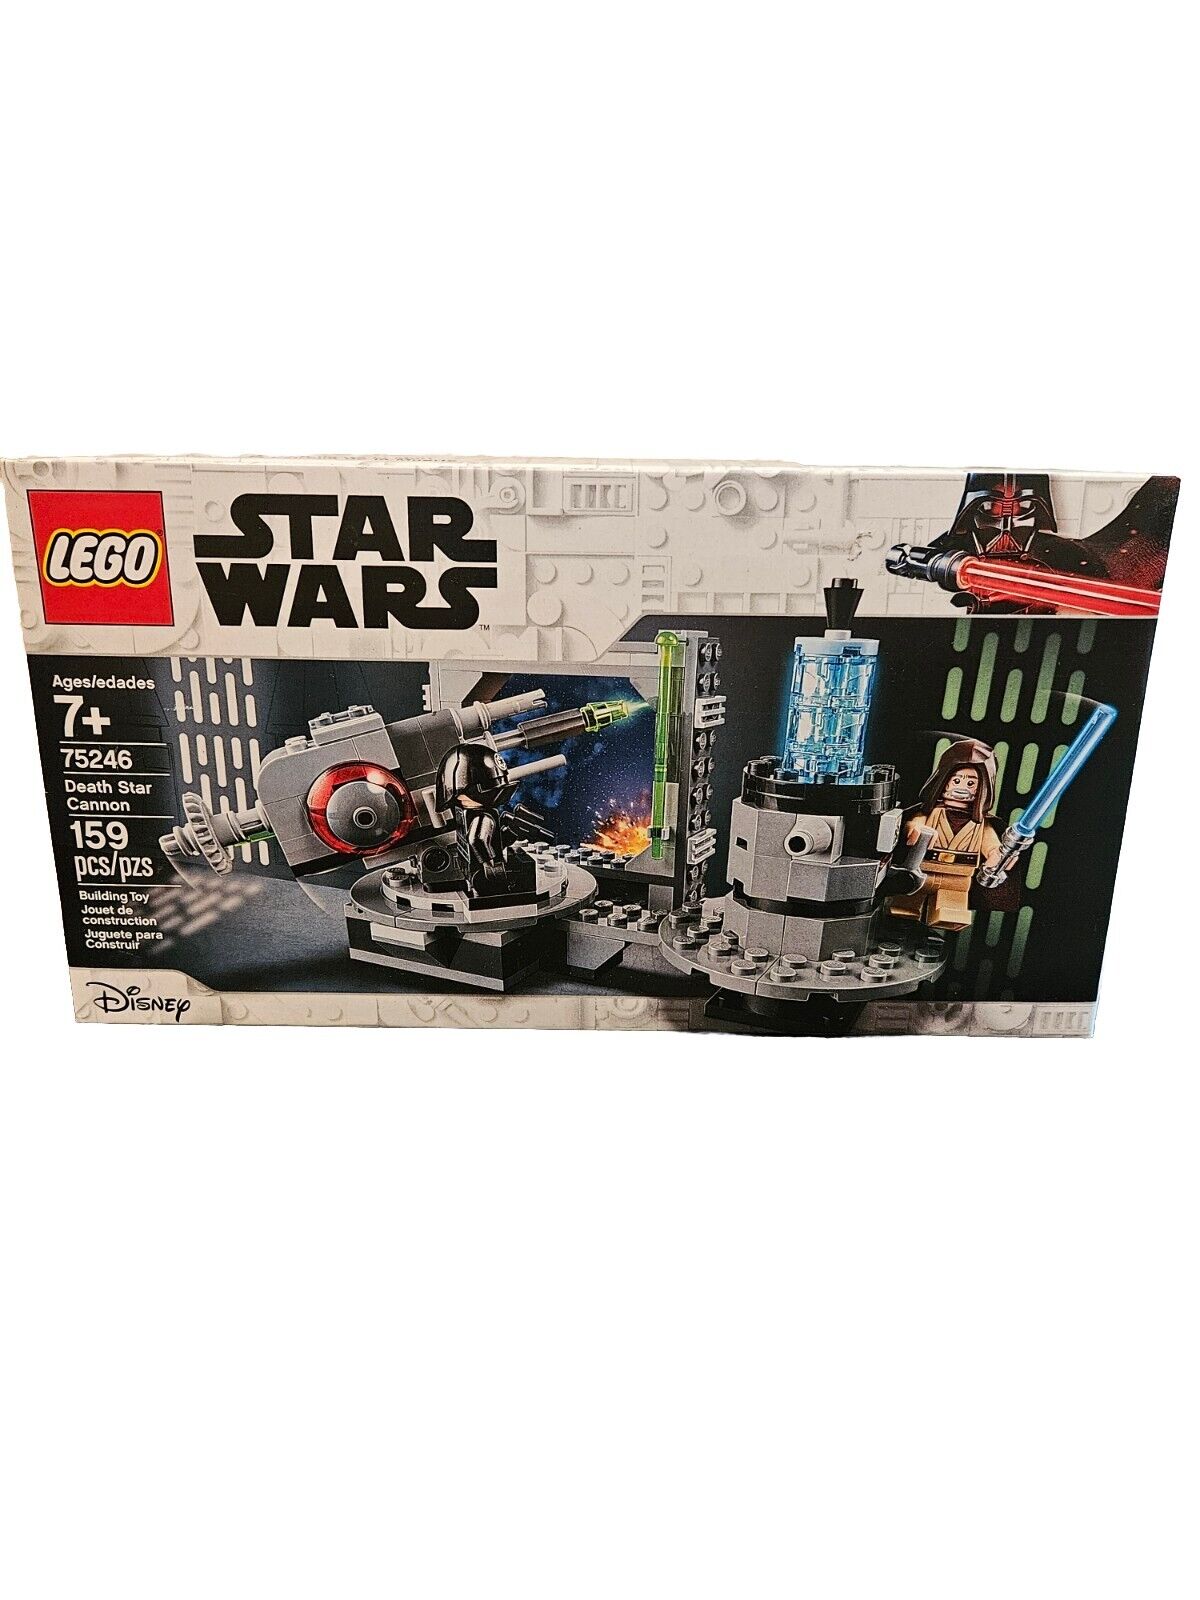 Death Star Cannon Retired Lego Star Wars Set 75246 - Sealed